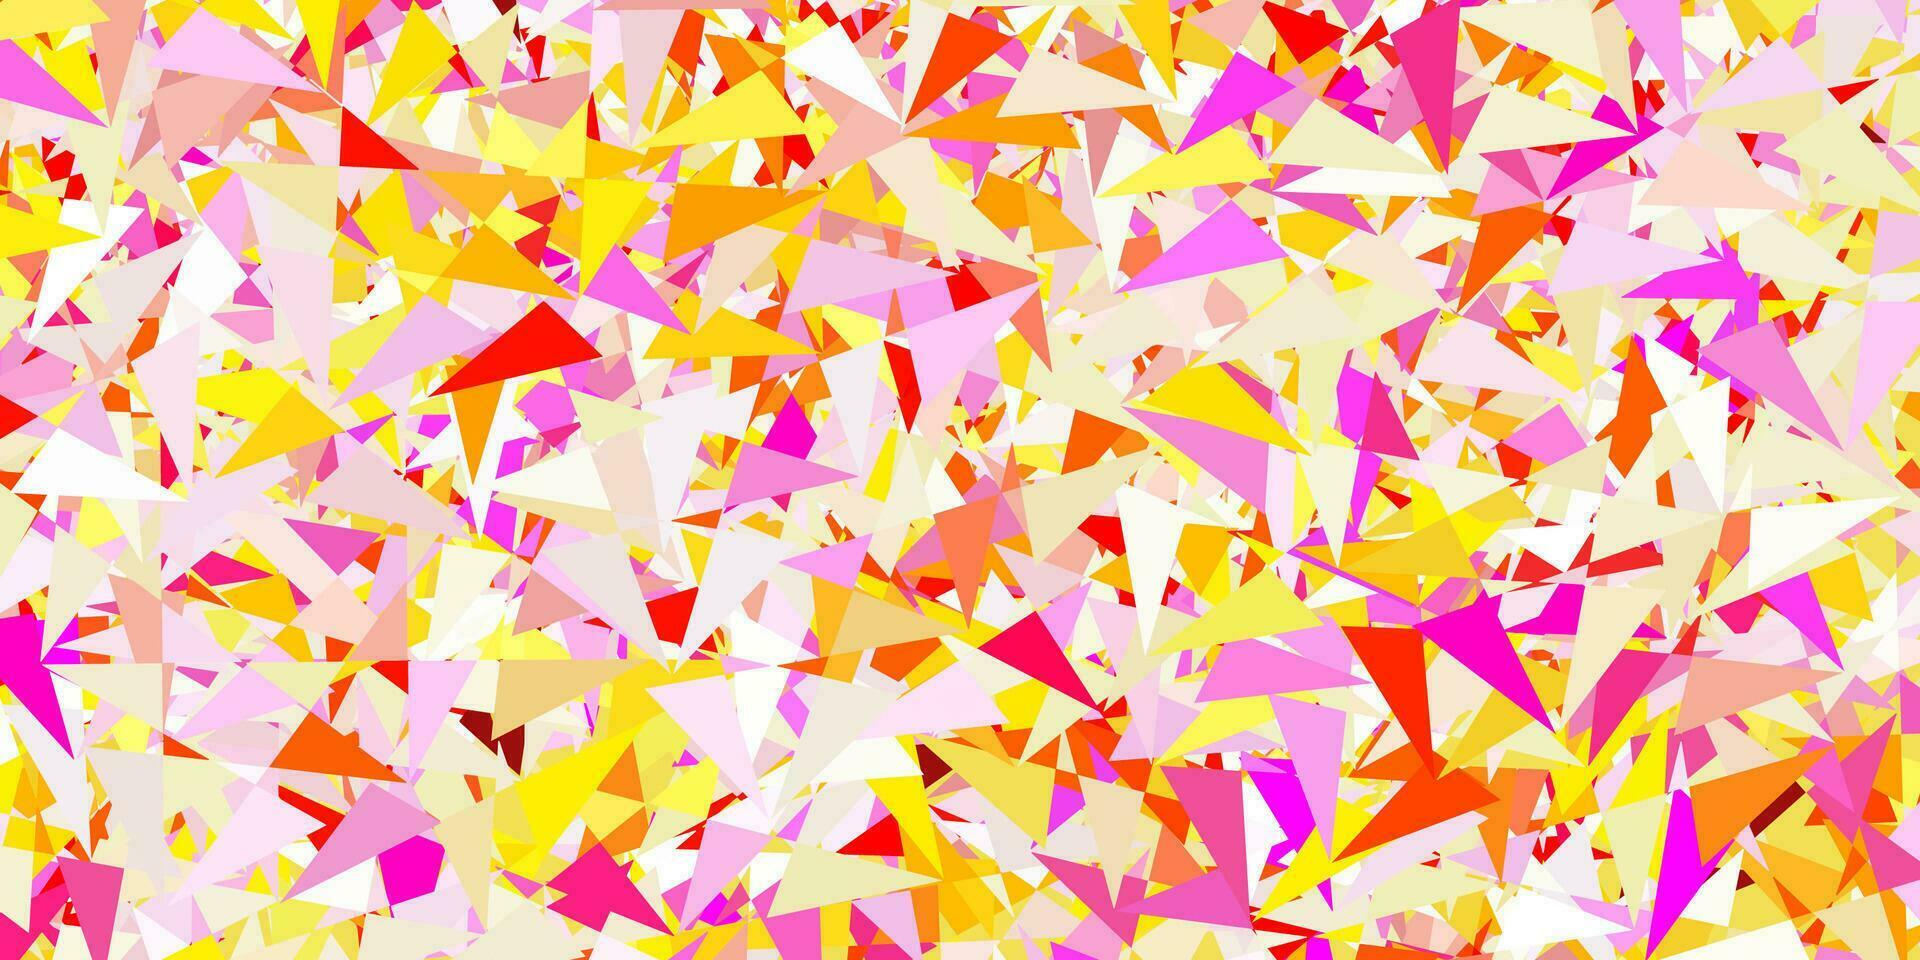 luz de fundo vector multicolor com formas poligonais.